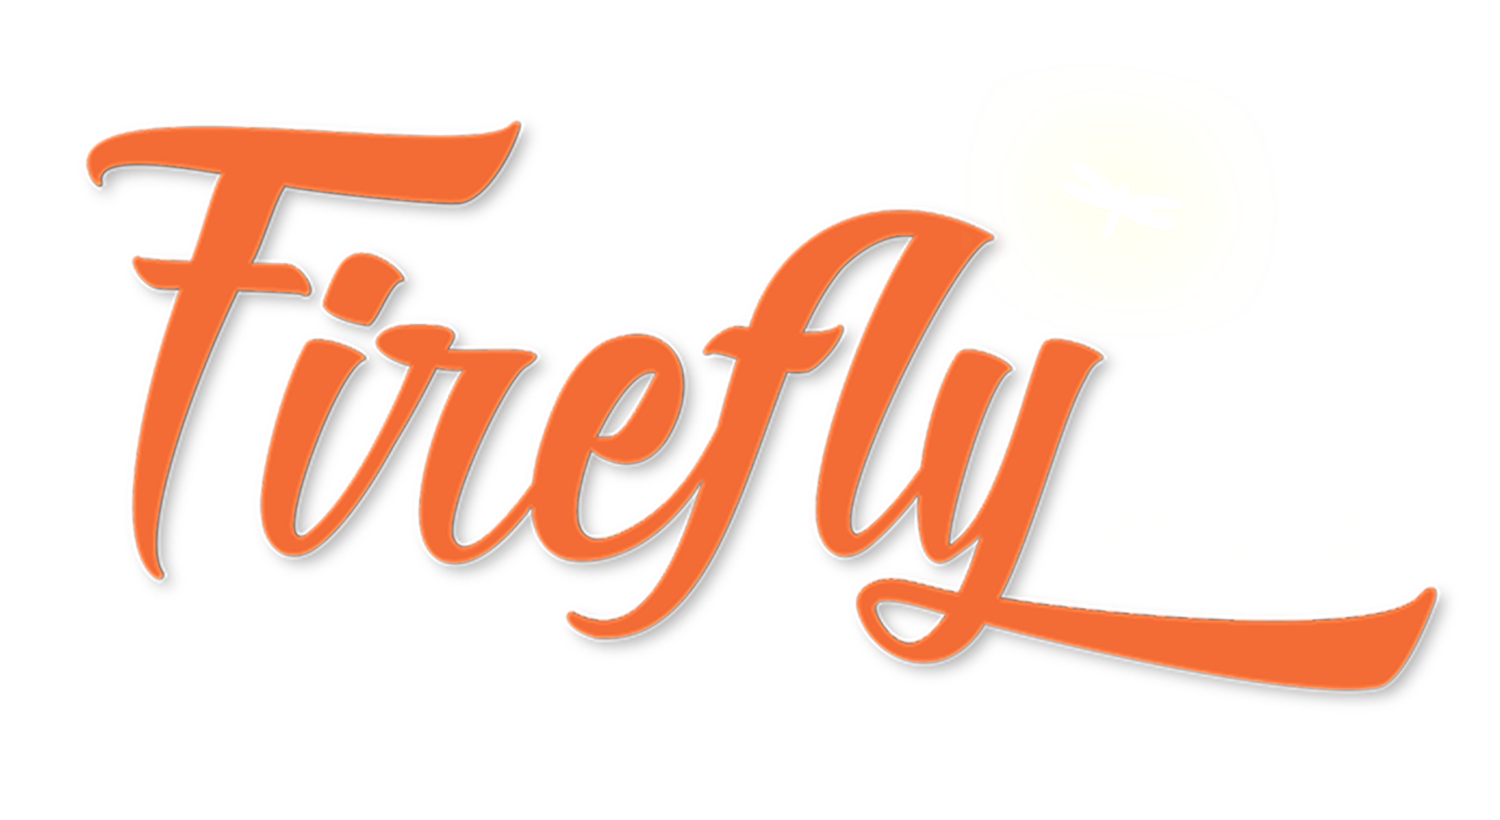 Firefly Films